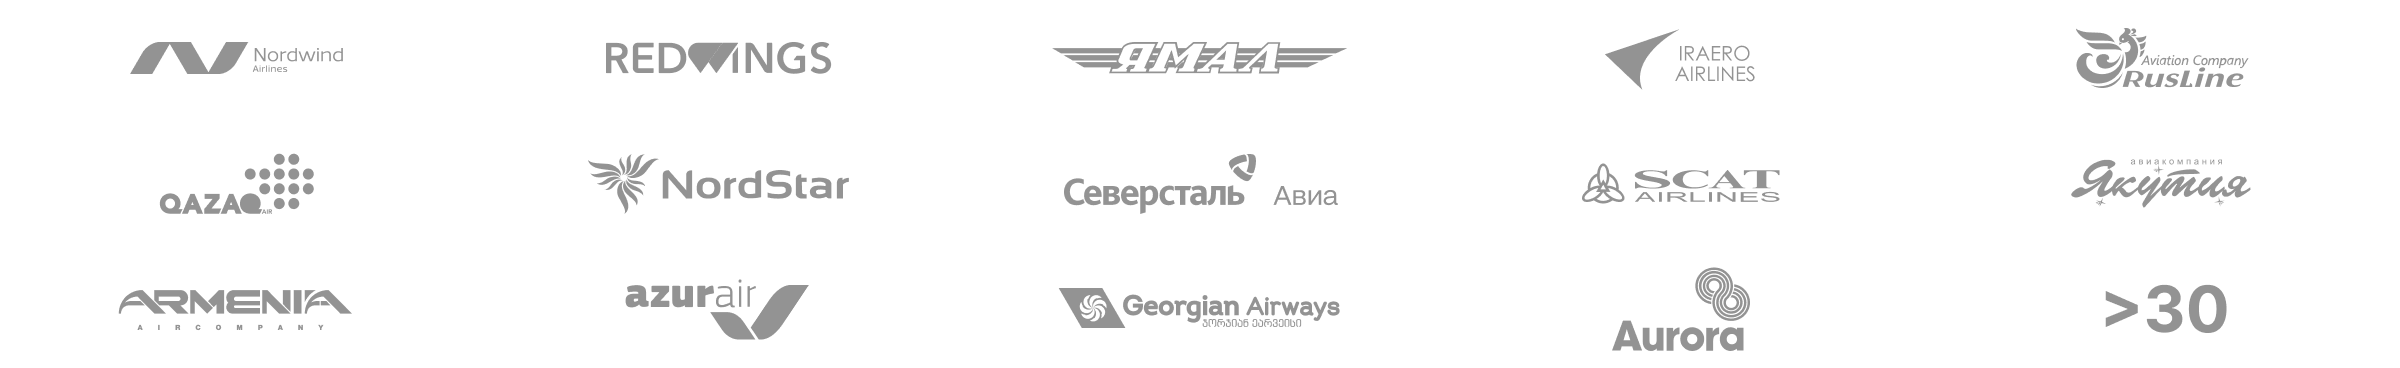 avia companies